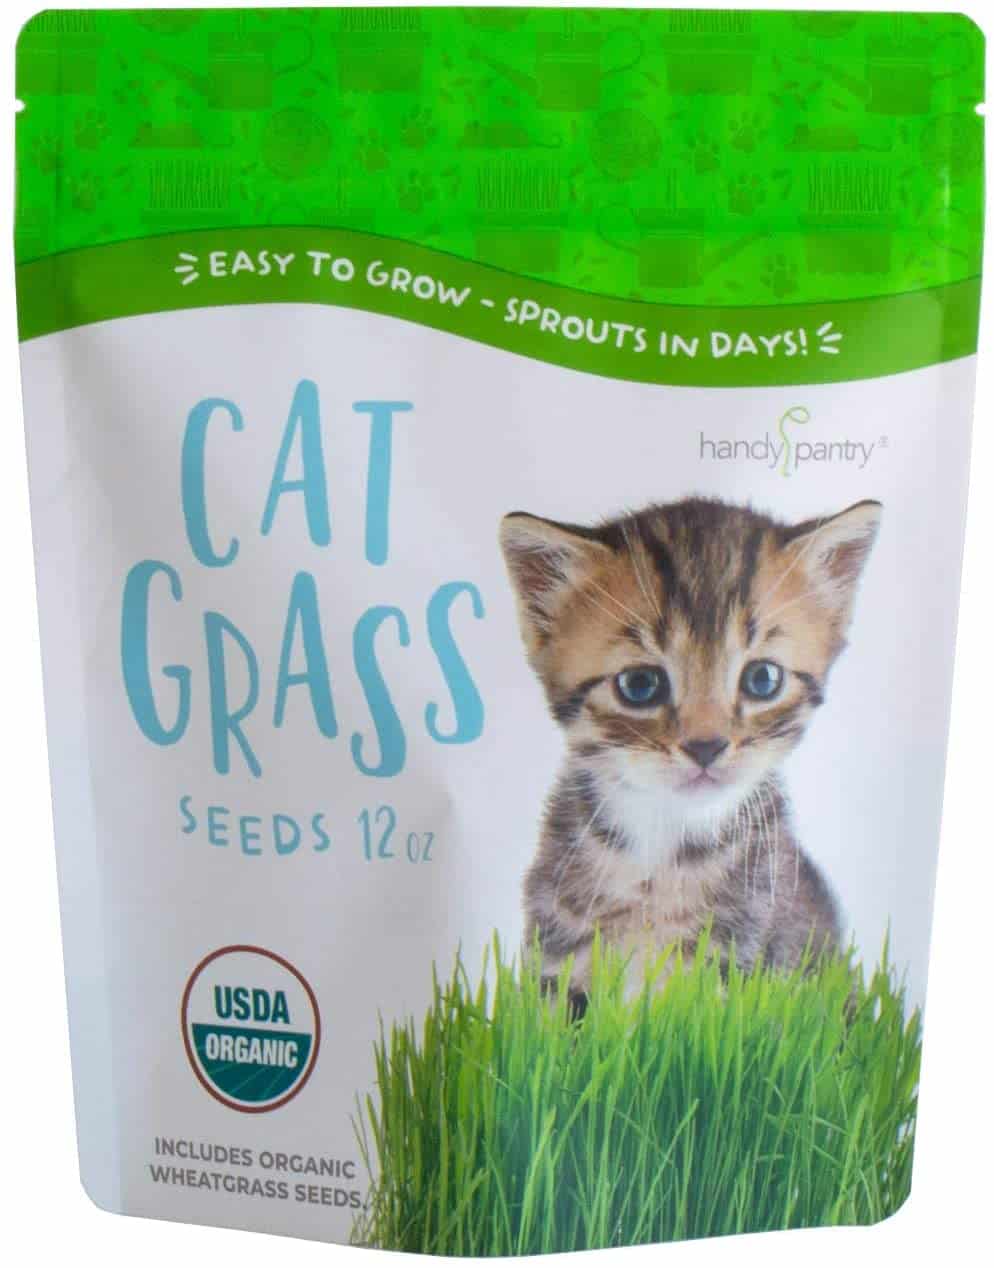 a package of organic cat grass seeds